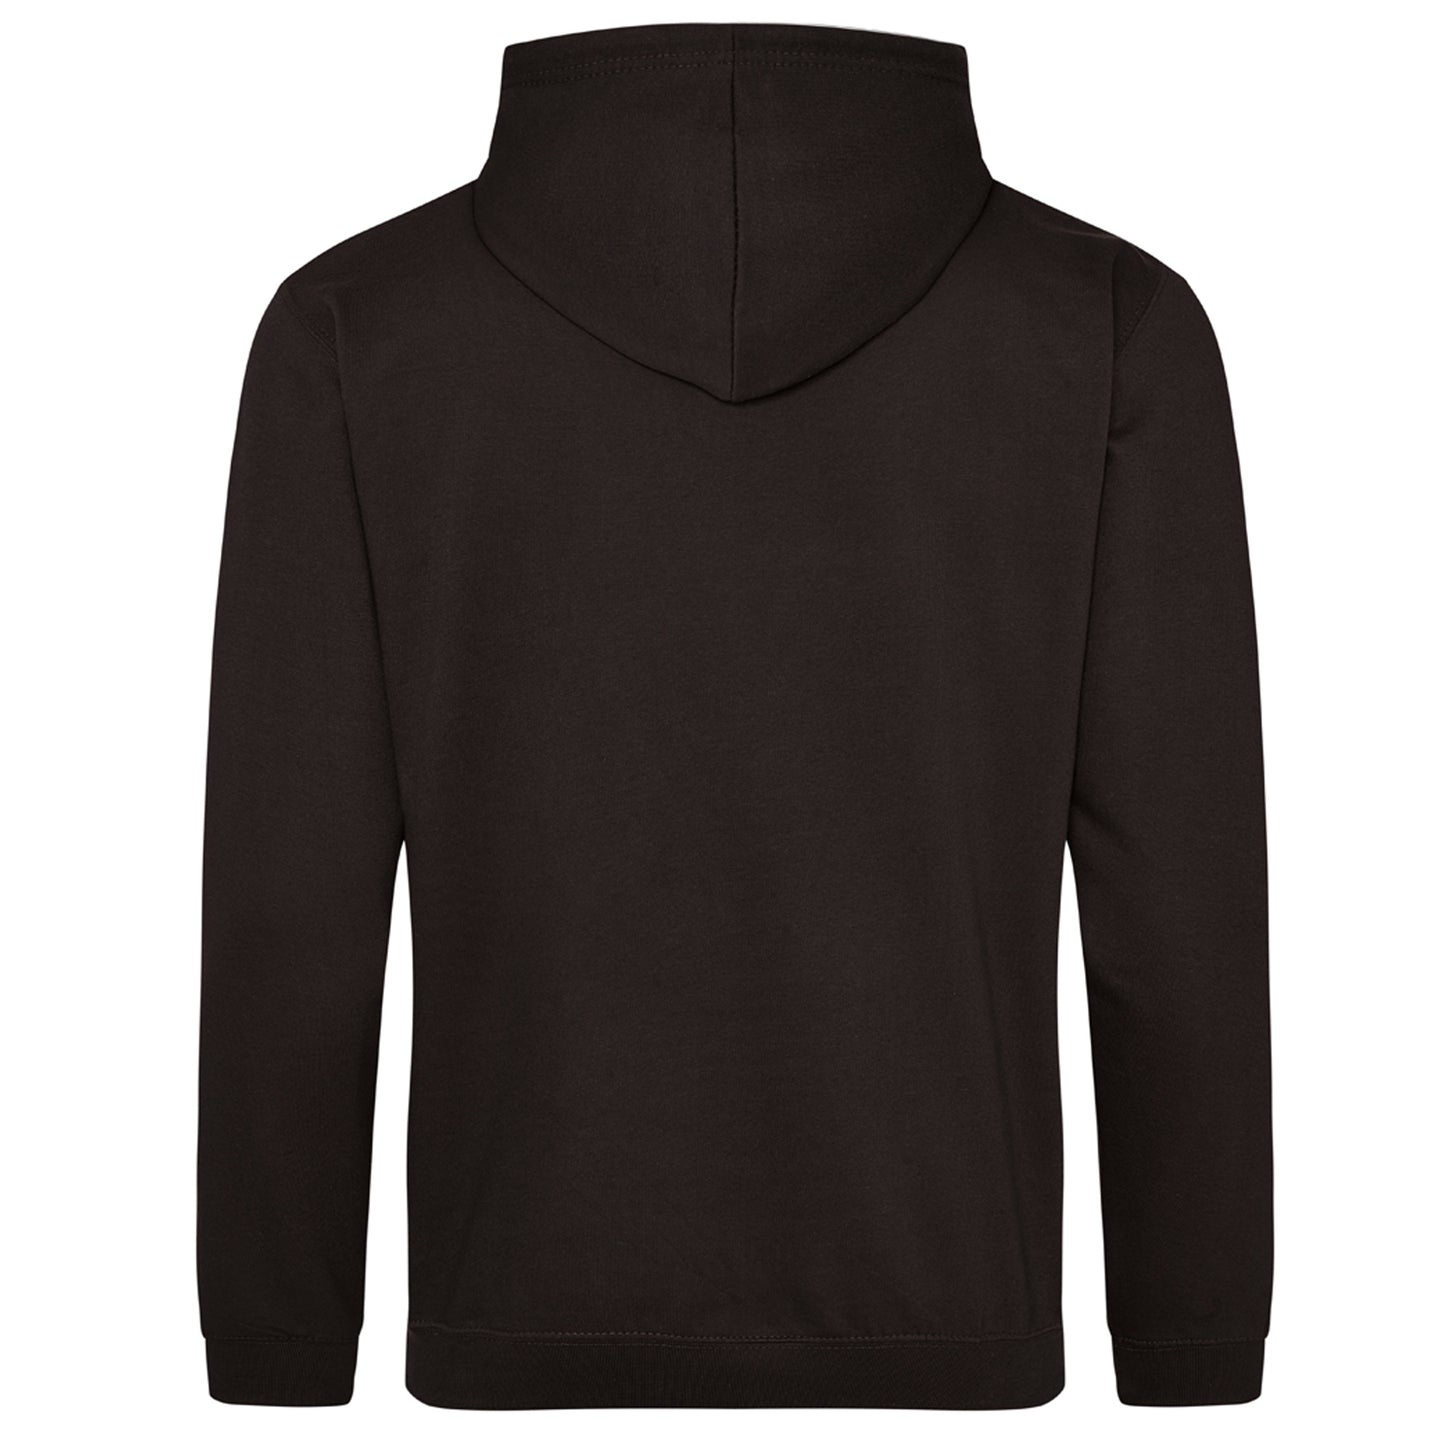 FARA - Hooded Sweater - Black